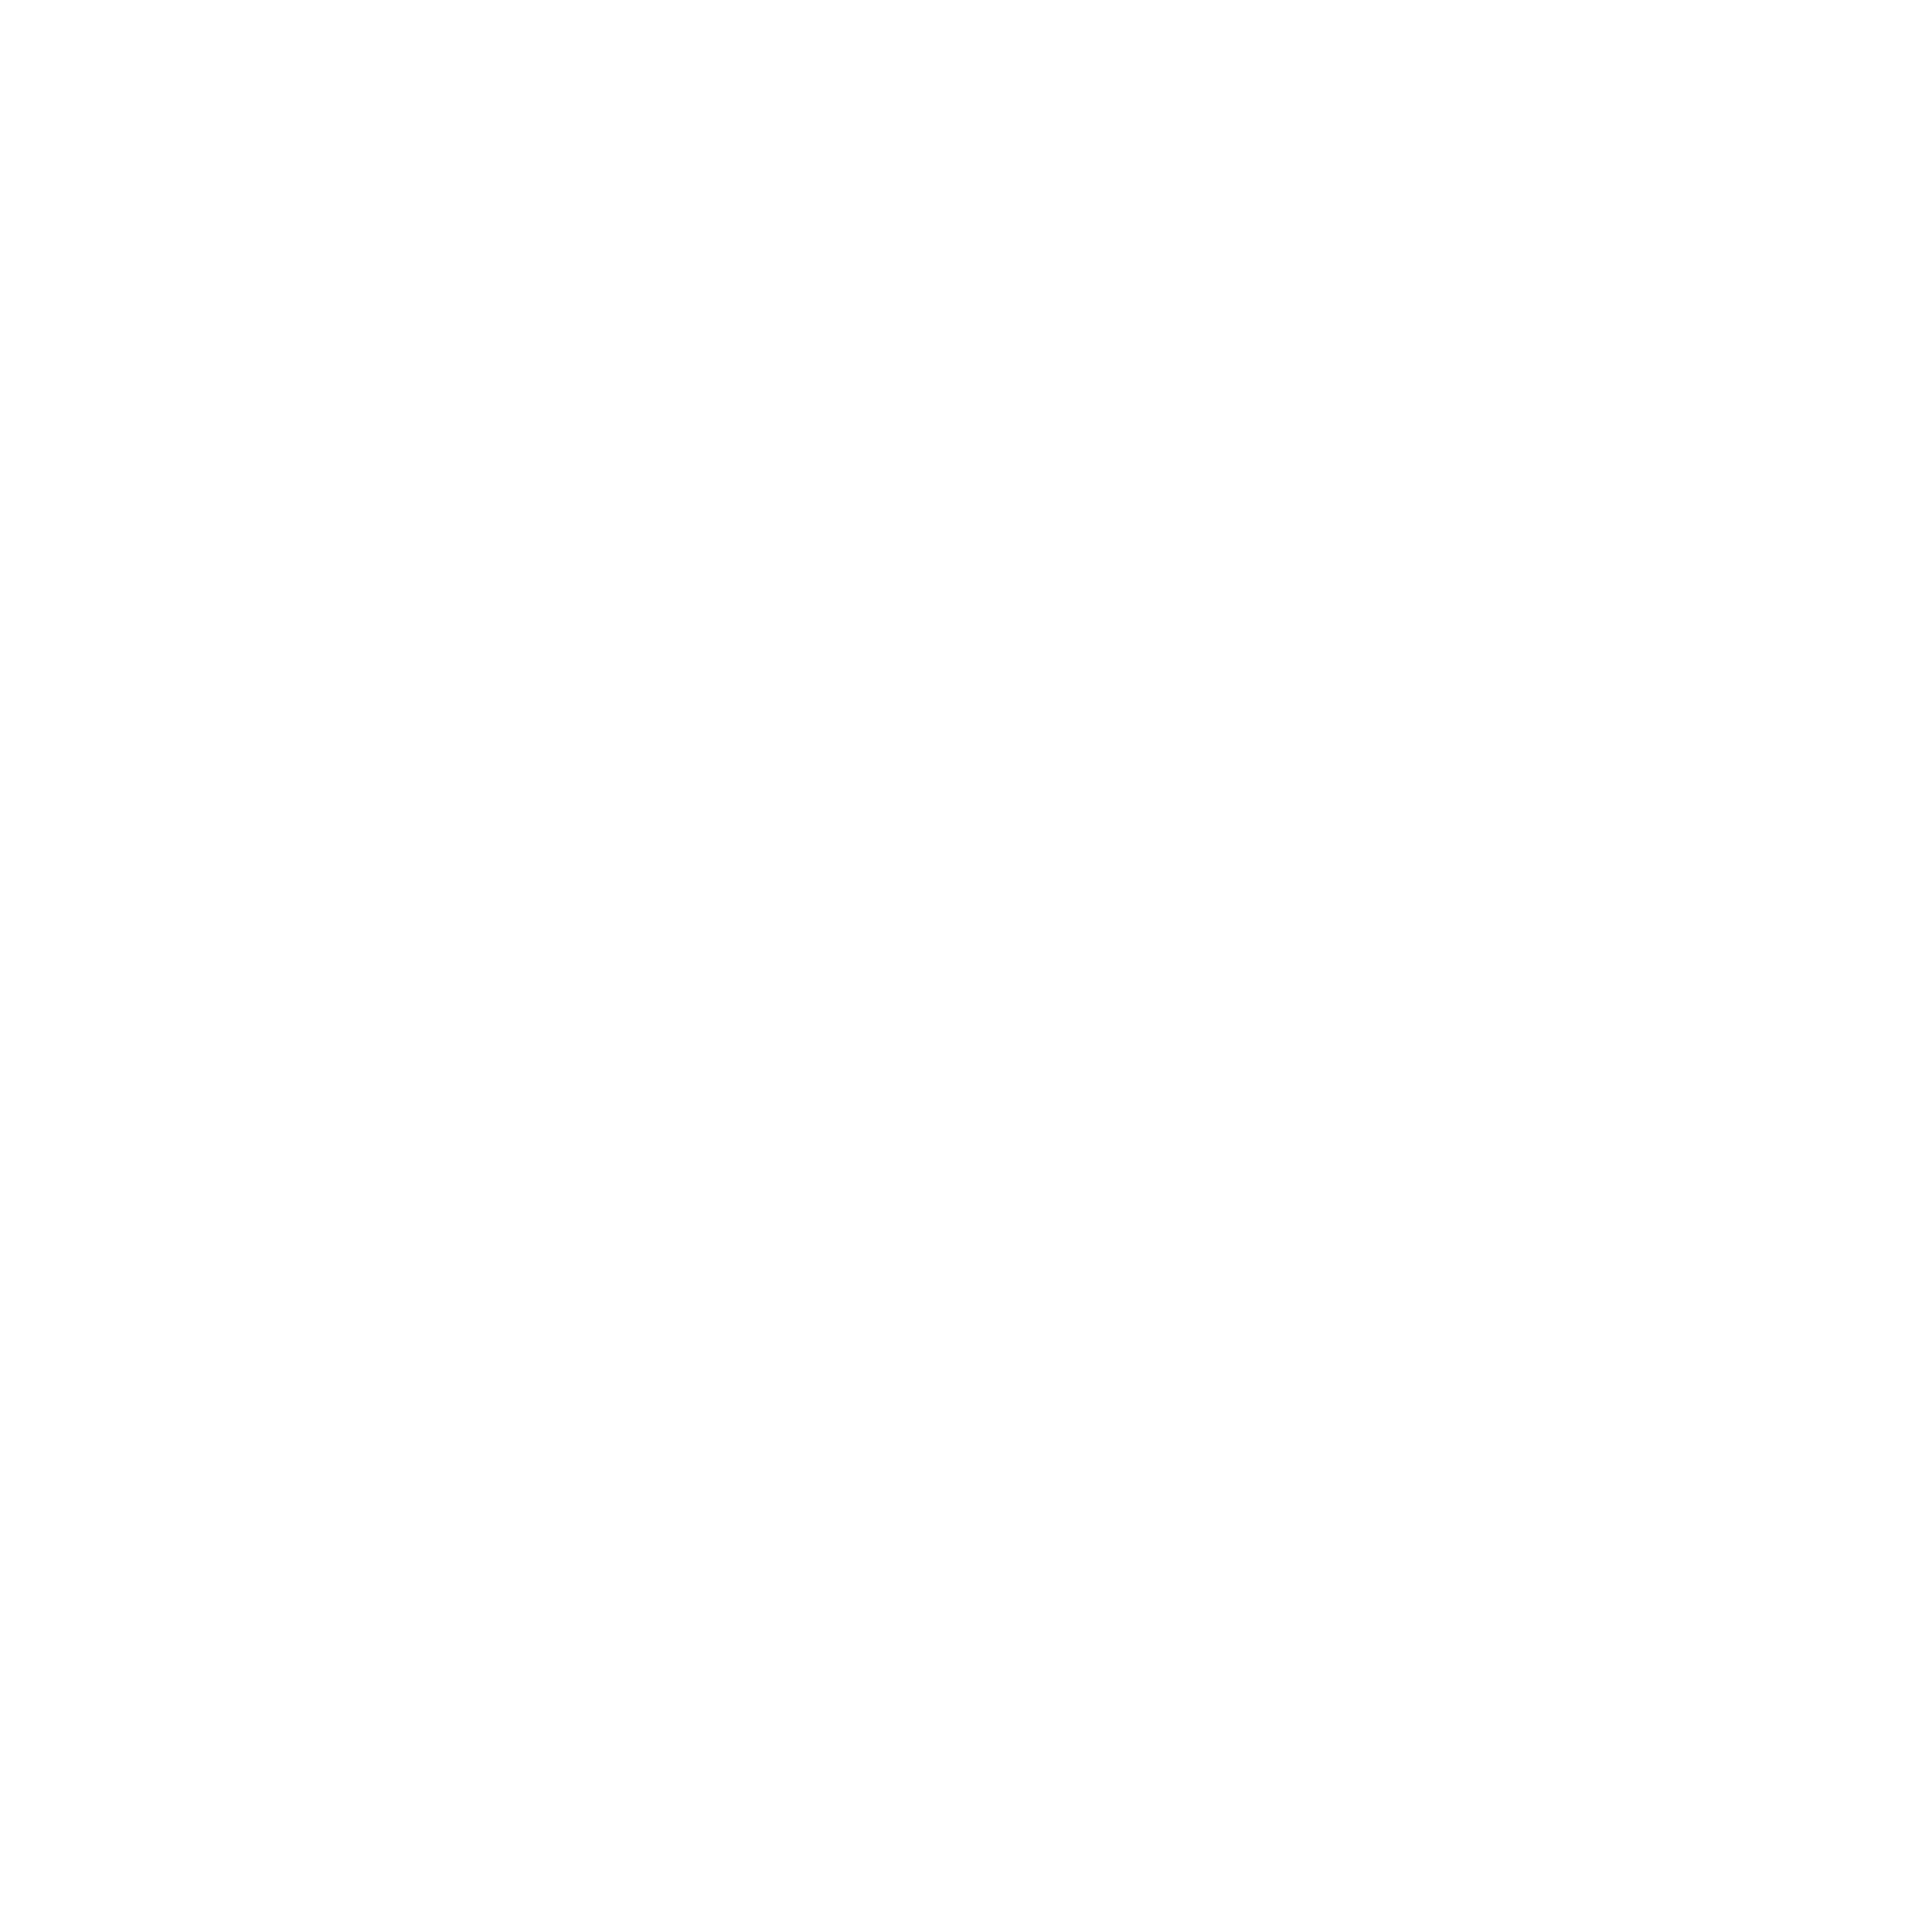 Members Michelle Wordsworth logo